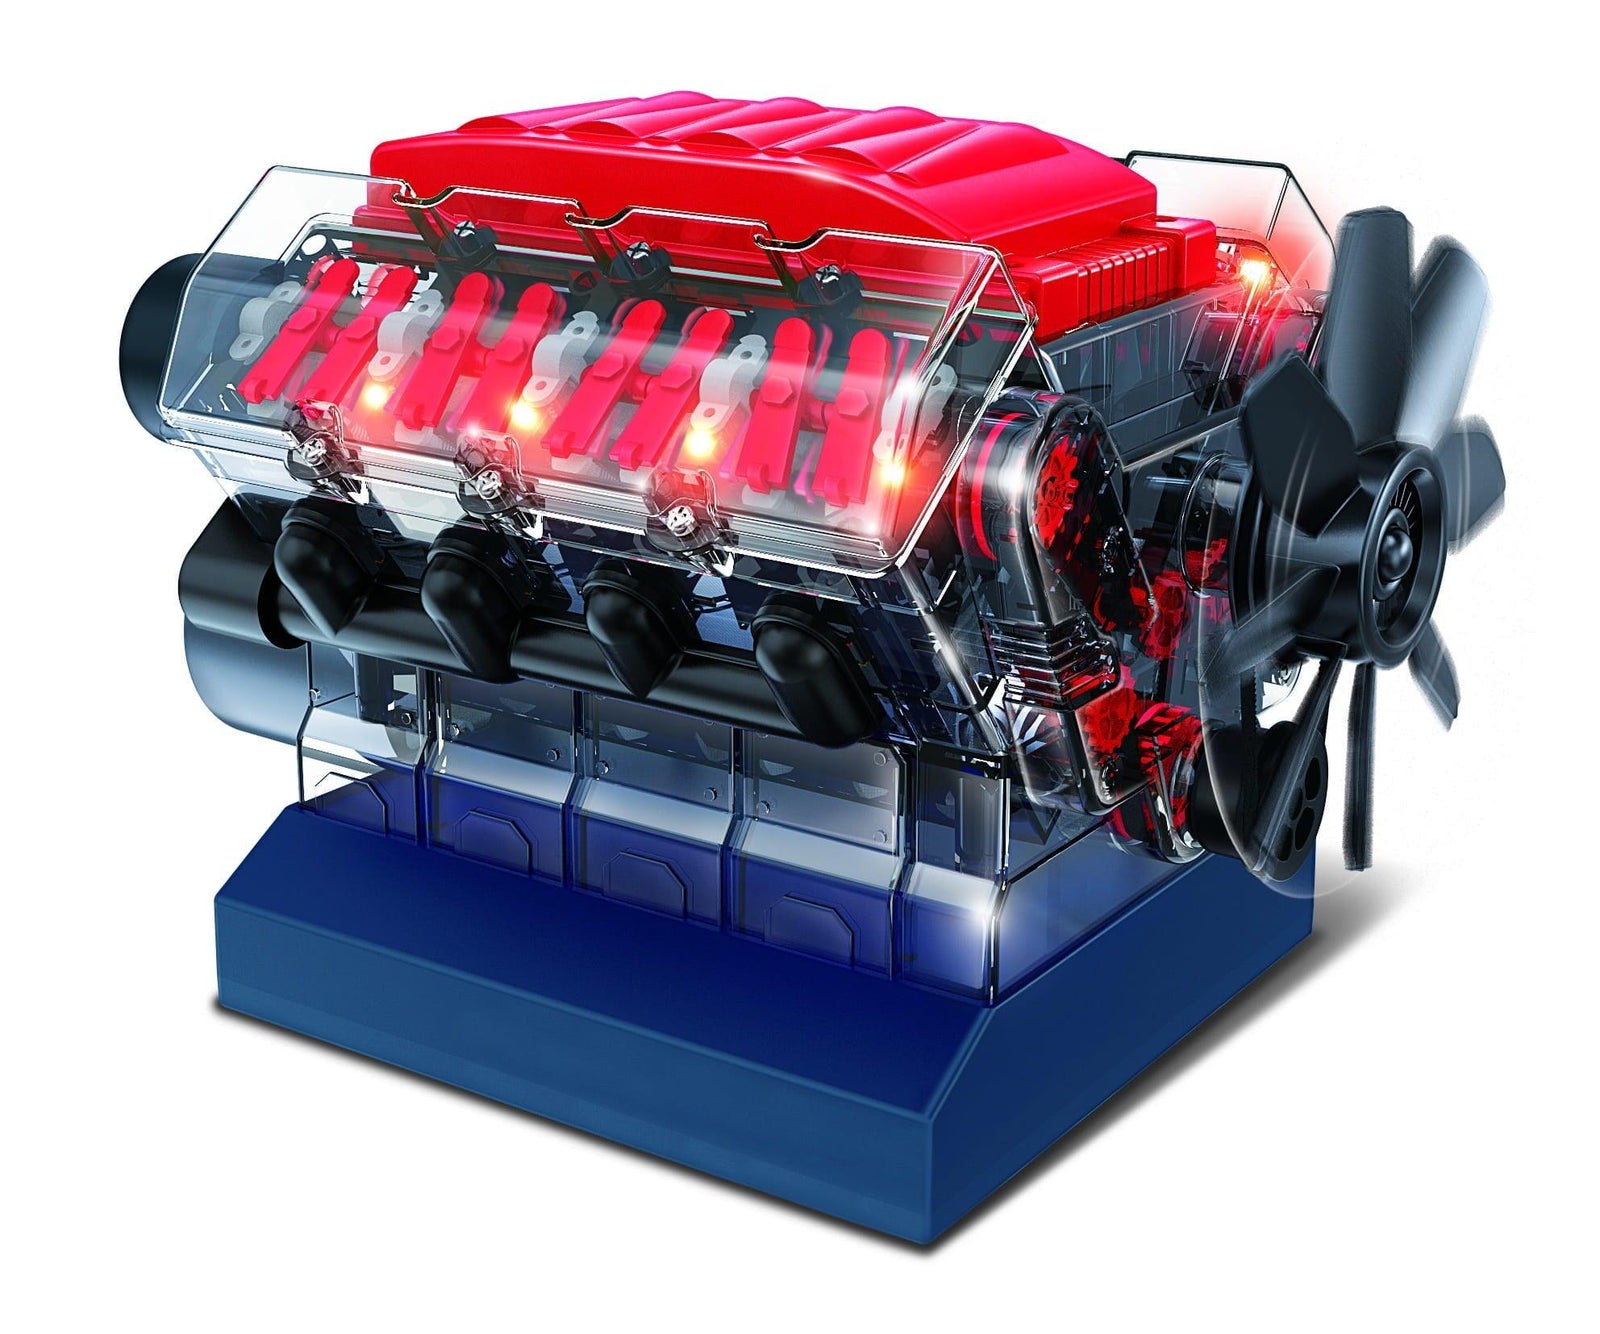 Buki: V8 engine model